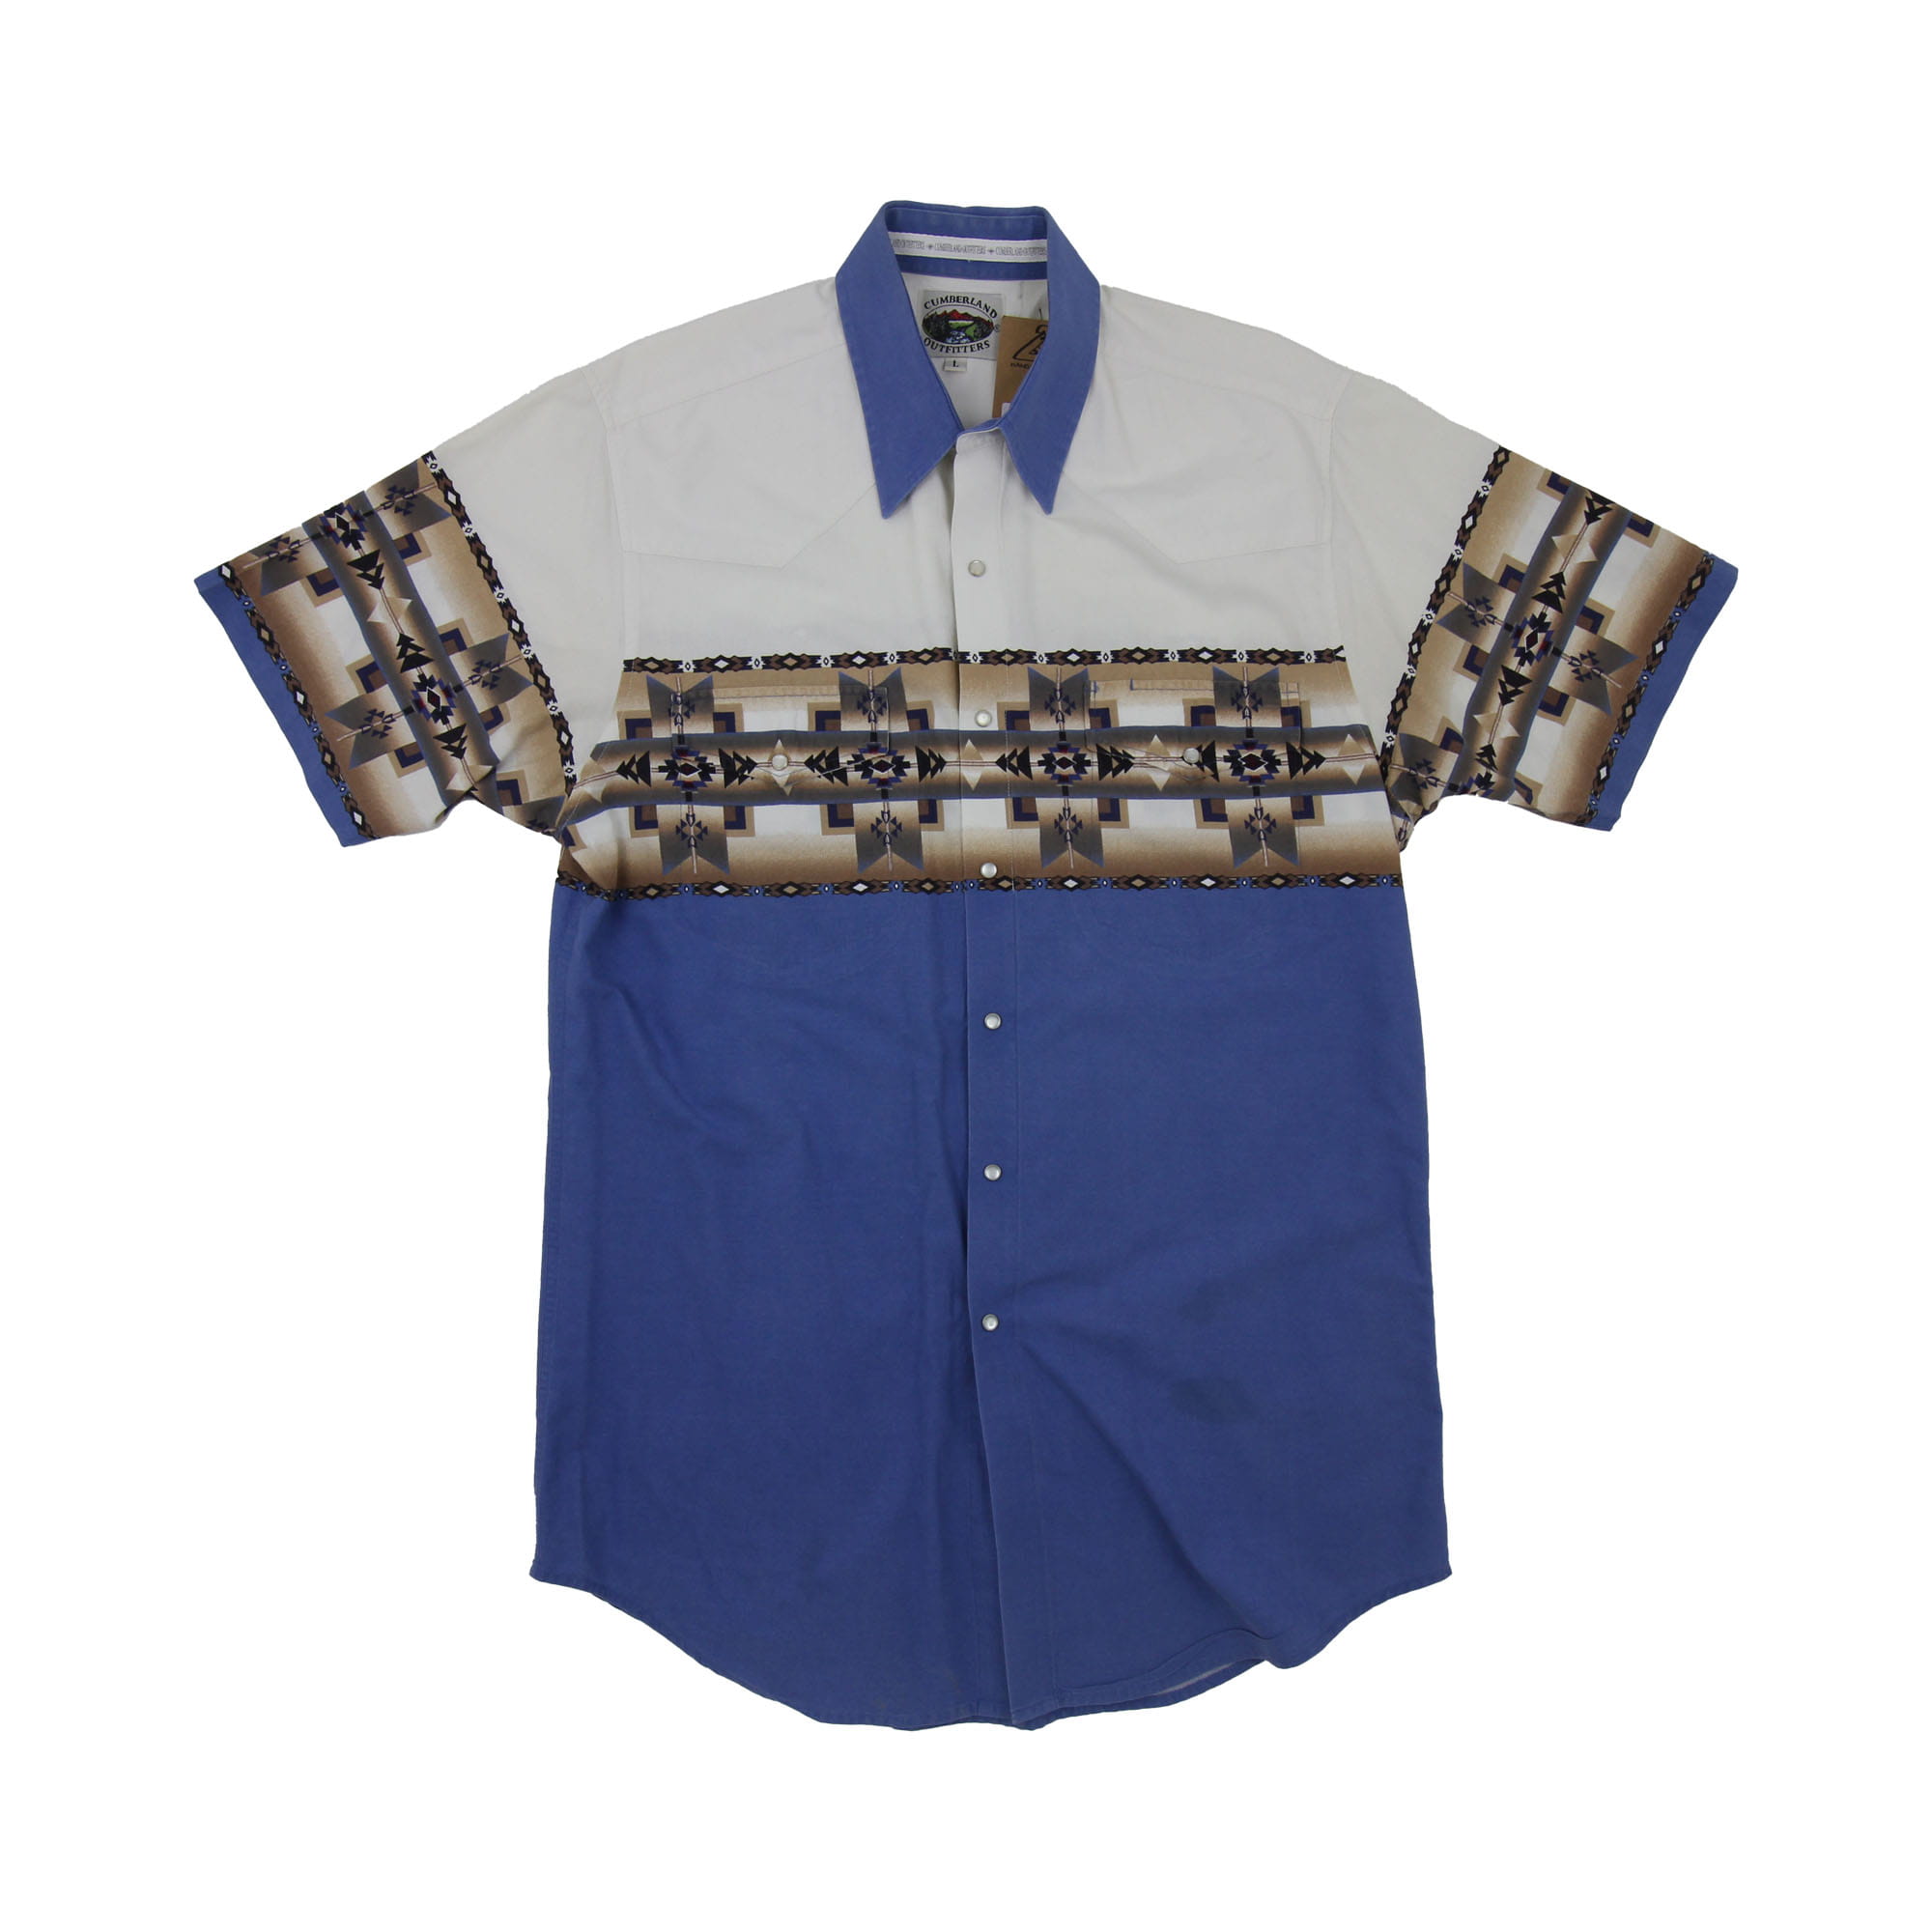 Cumberland Outfitters Thin Short Sleeve Shirt -  XL